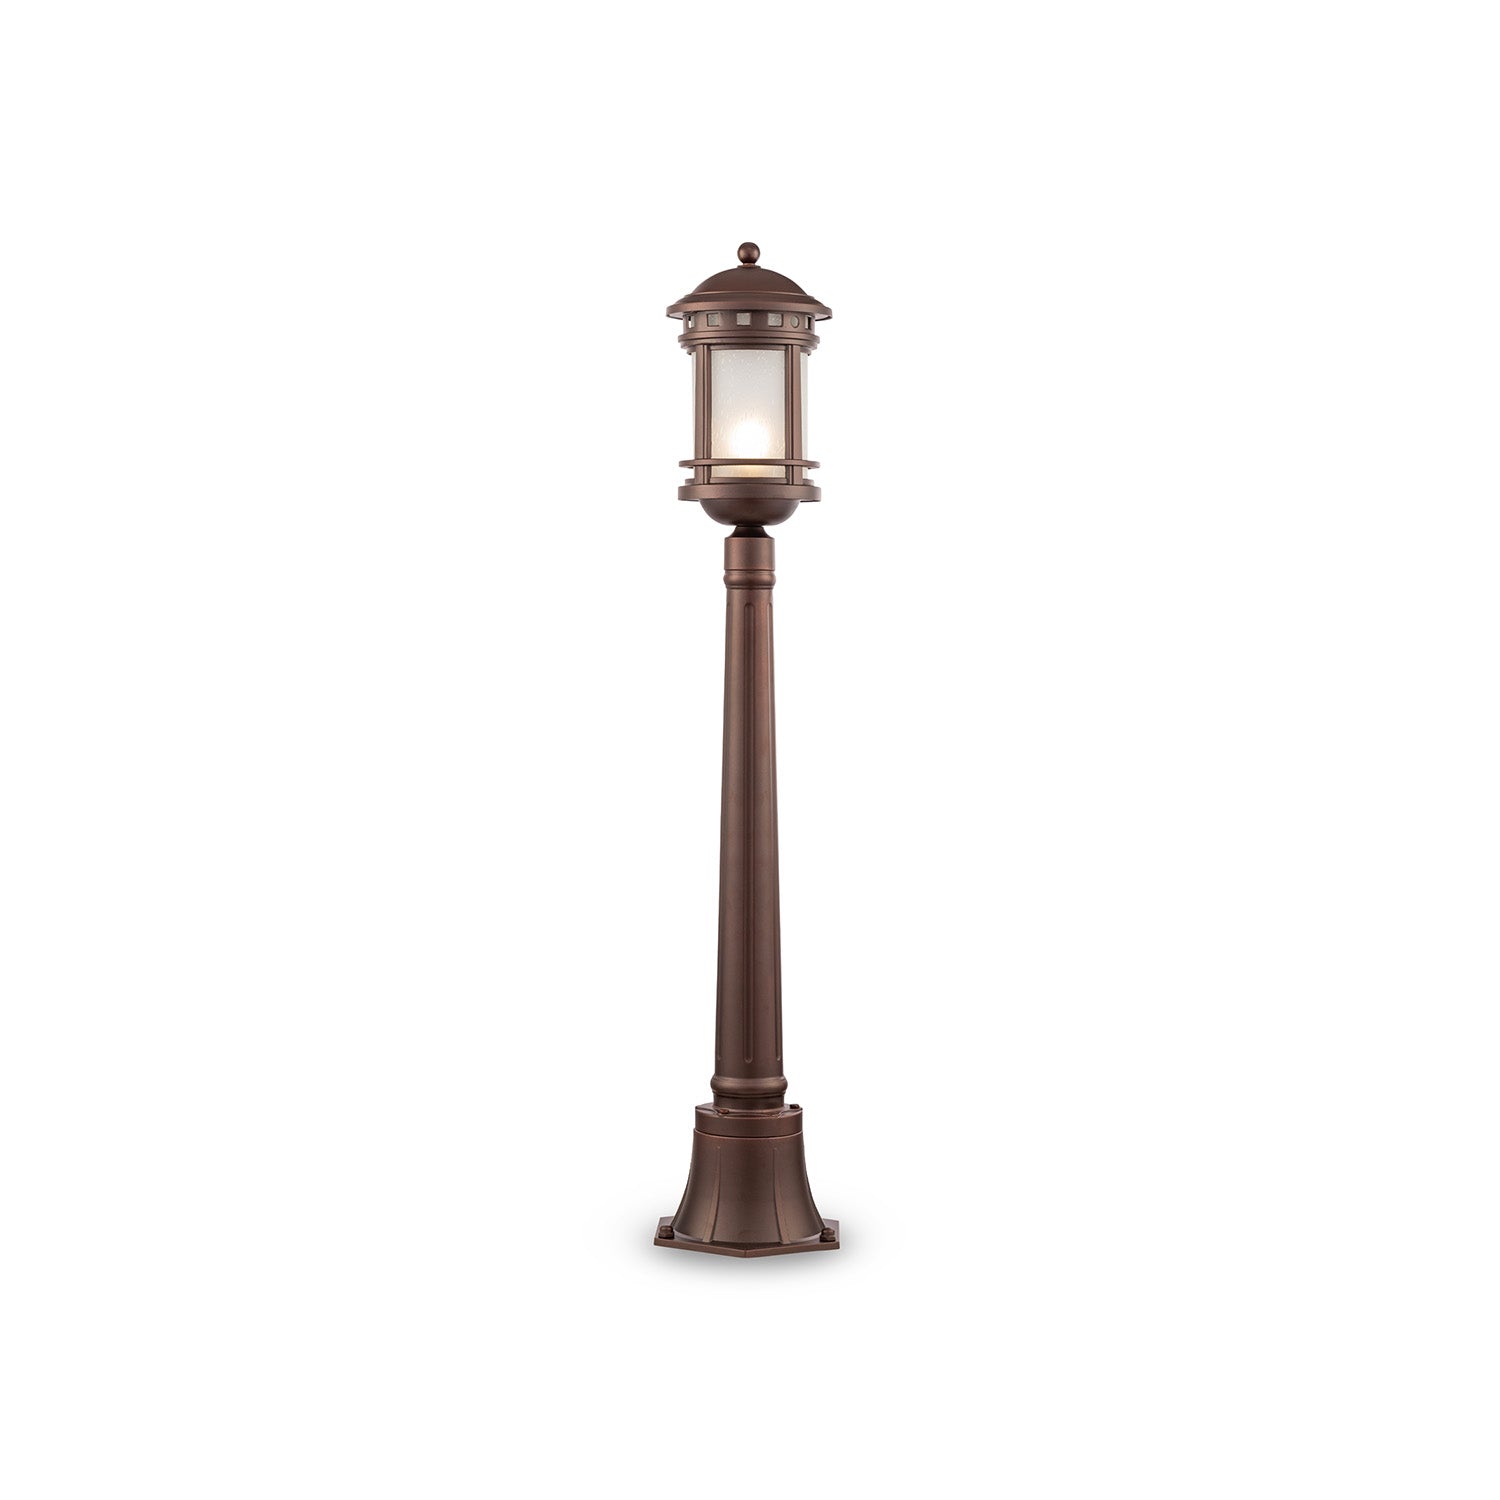 SALAMANCA – Antike Vintage-Stehlampe aus bronzefarbenem Stahl